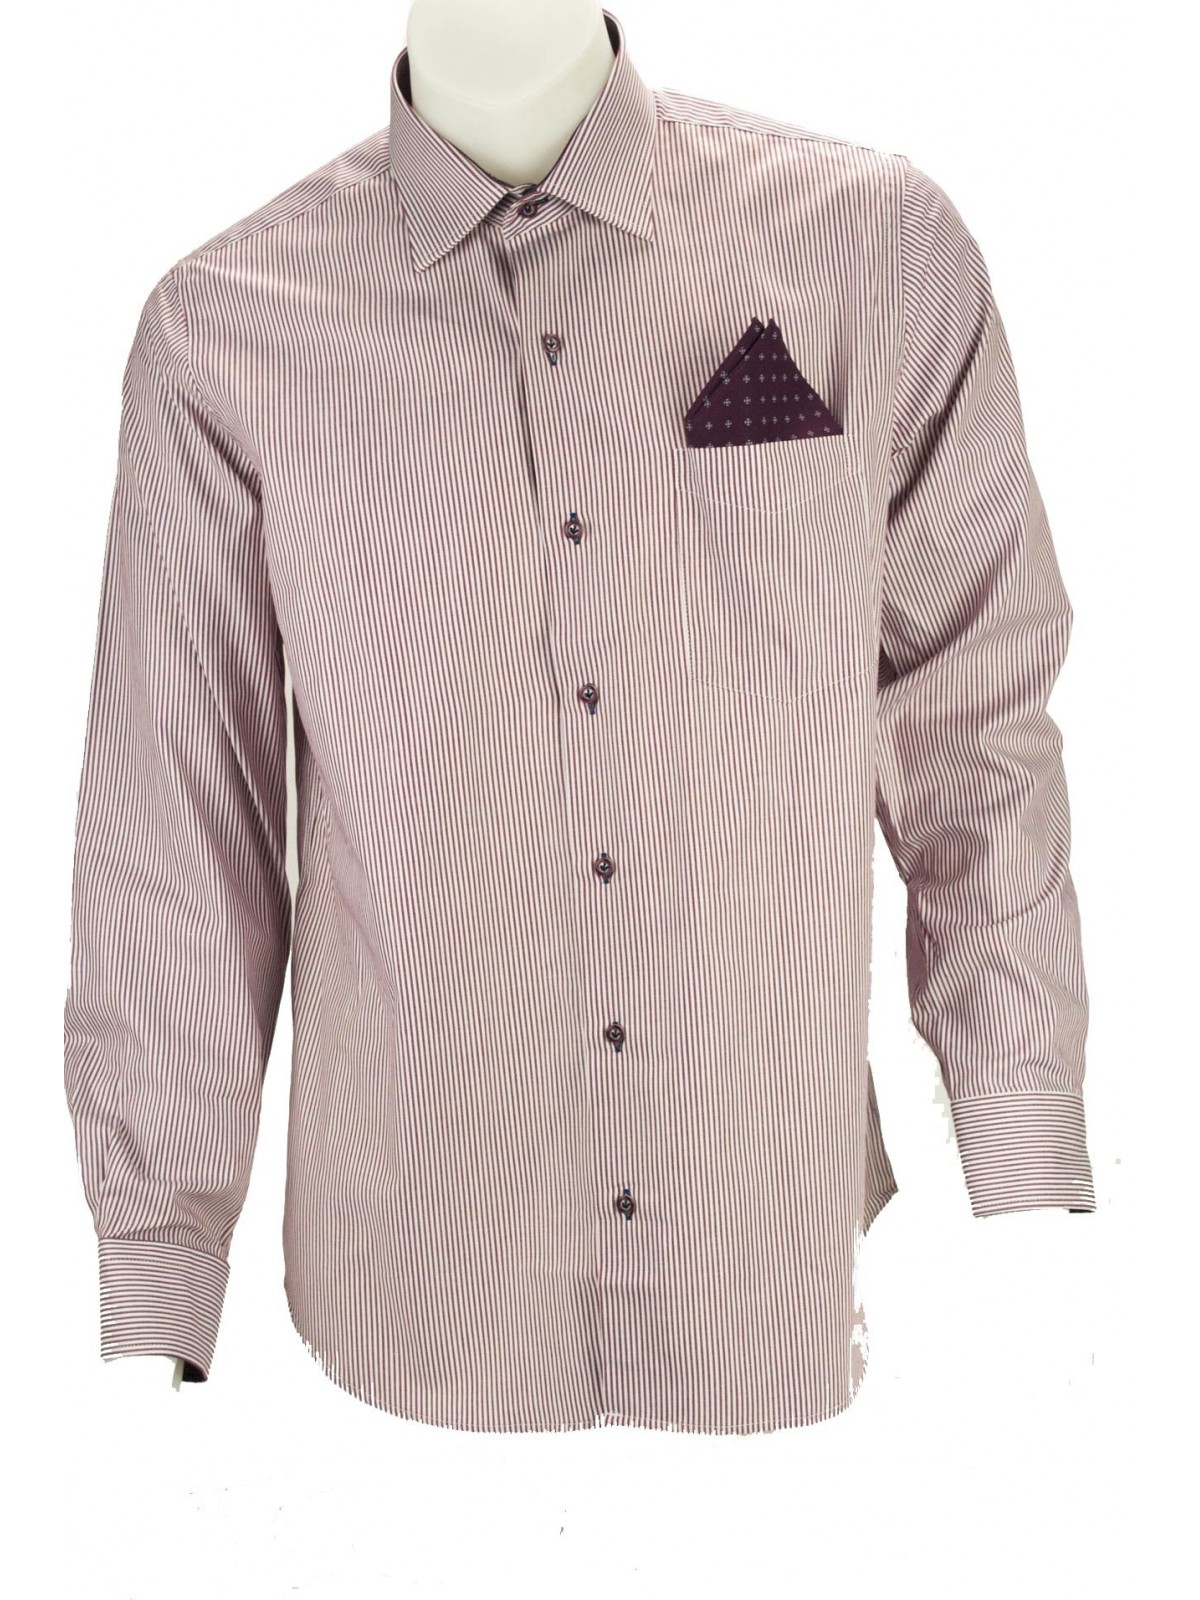 Elegant Men's Shirt 39 15½ Light blue woven fabric without pocket - Philo Vance